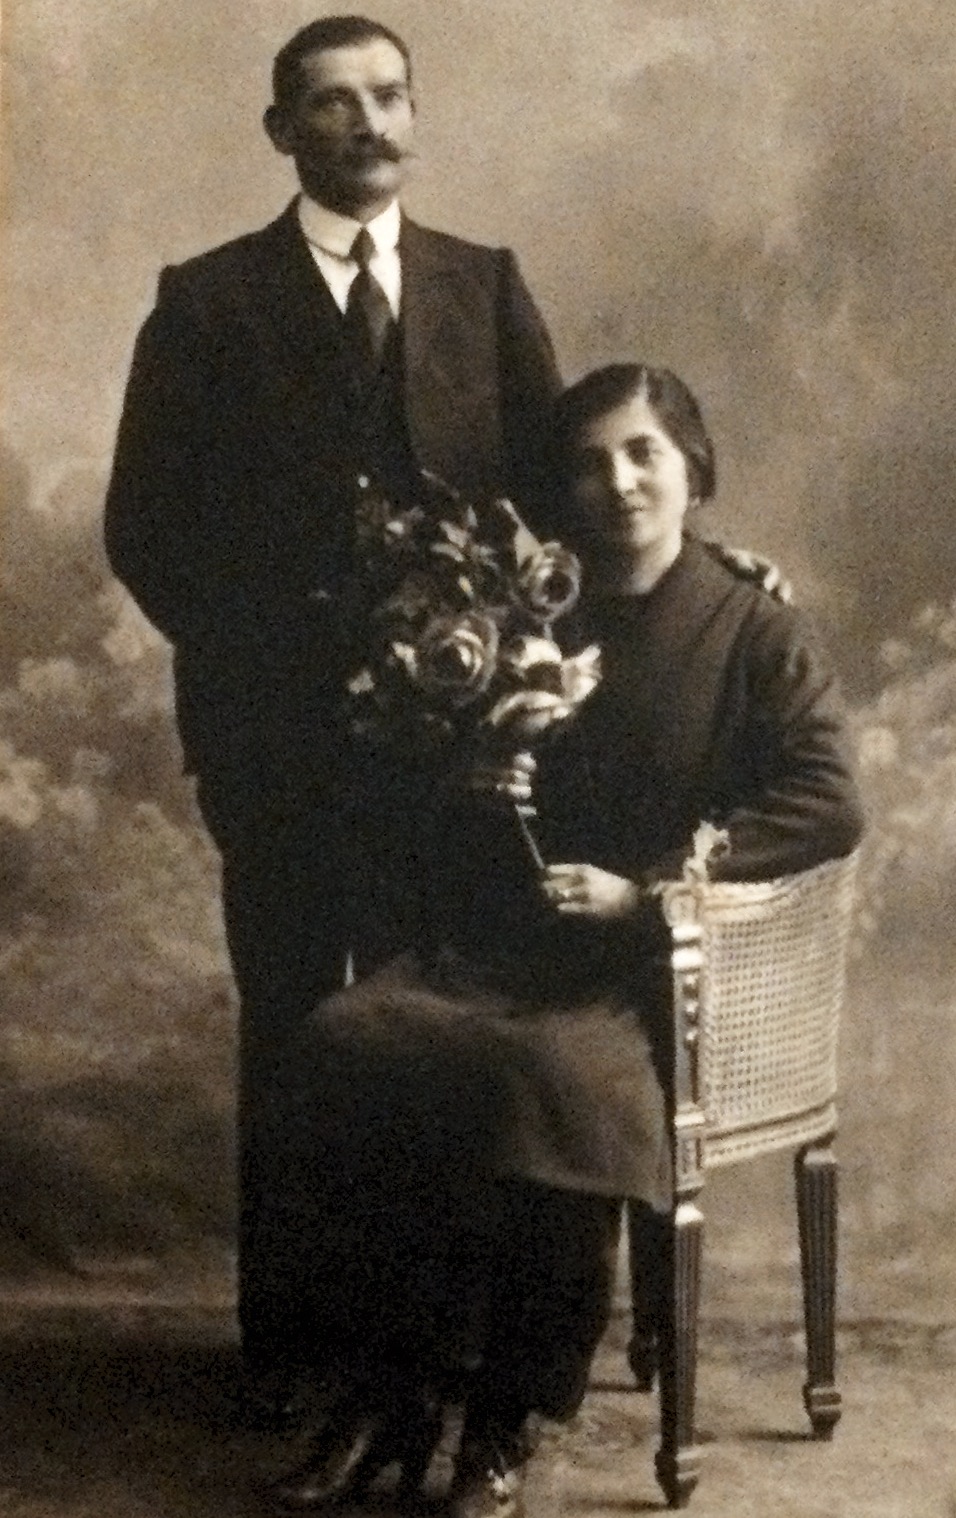 My grandparents wedding day in Teglio, Italy, 13th June, 1897